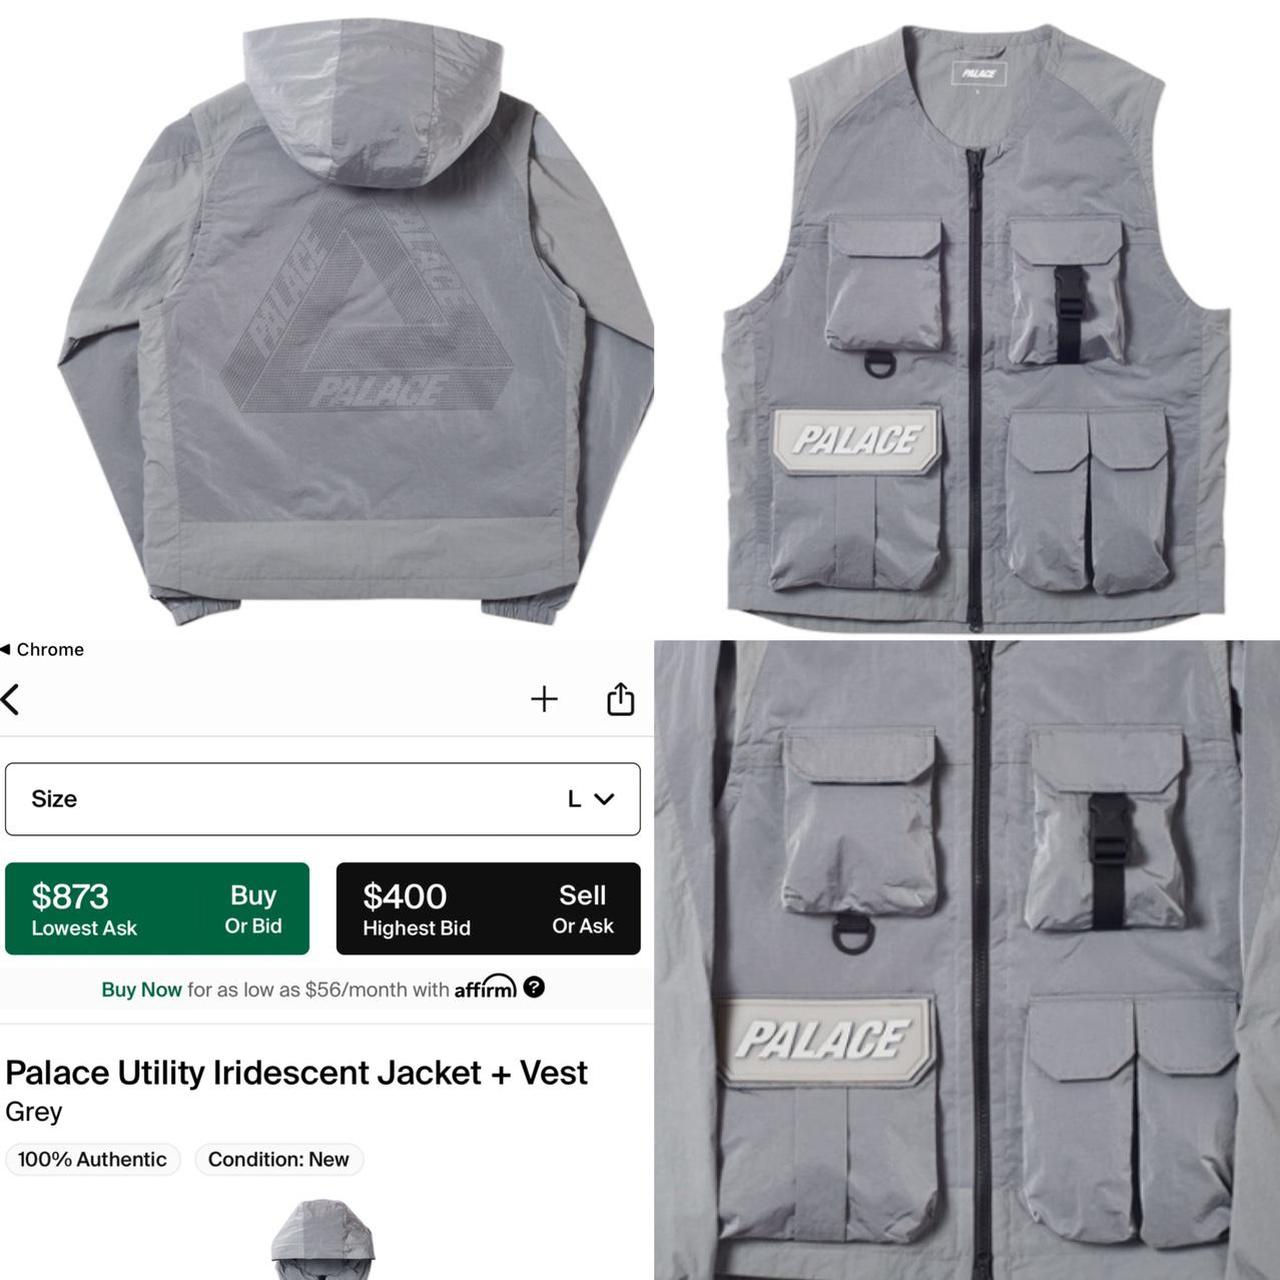 Palace Utility Iridescent Jacket + Vest | www.angur.com